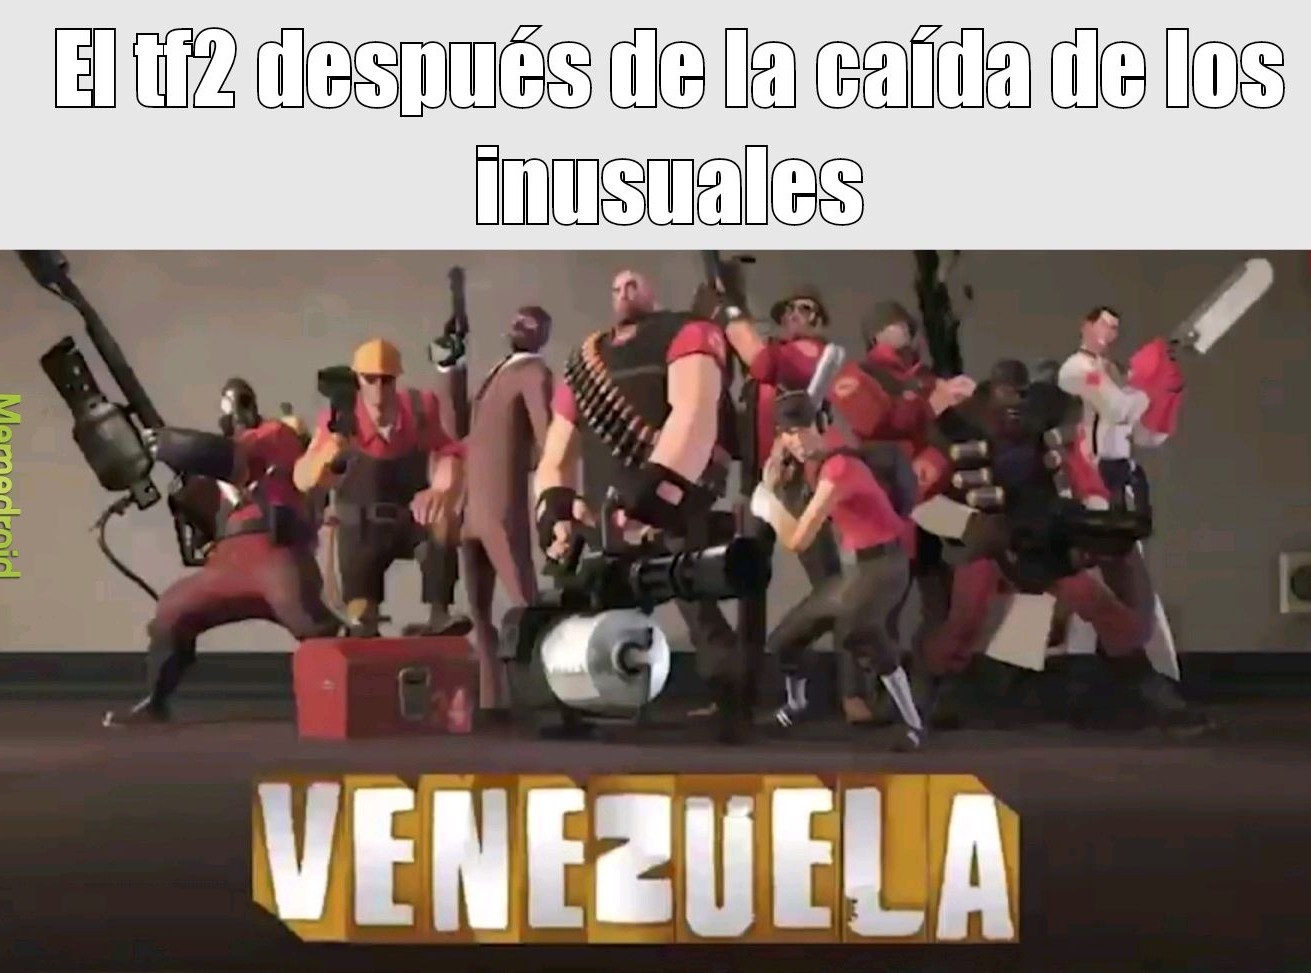 Momento venezuela - meme